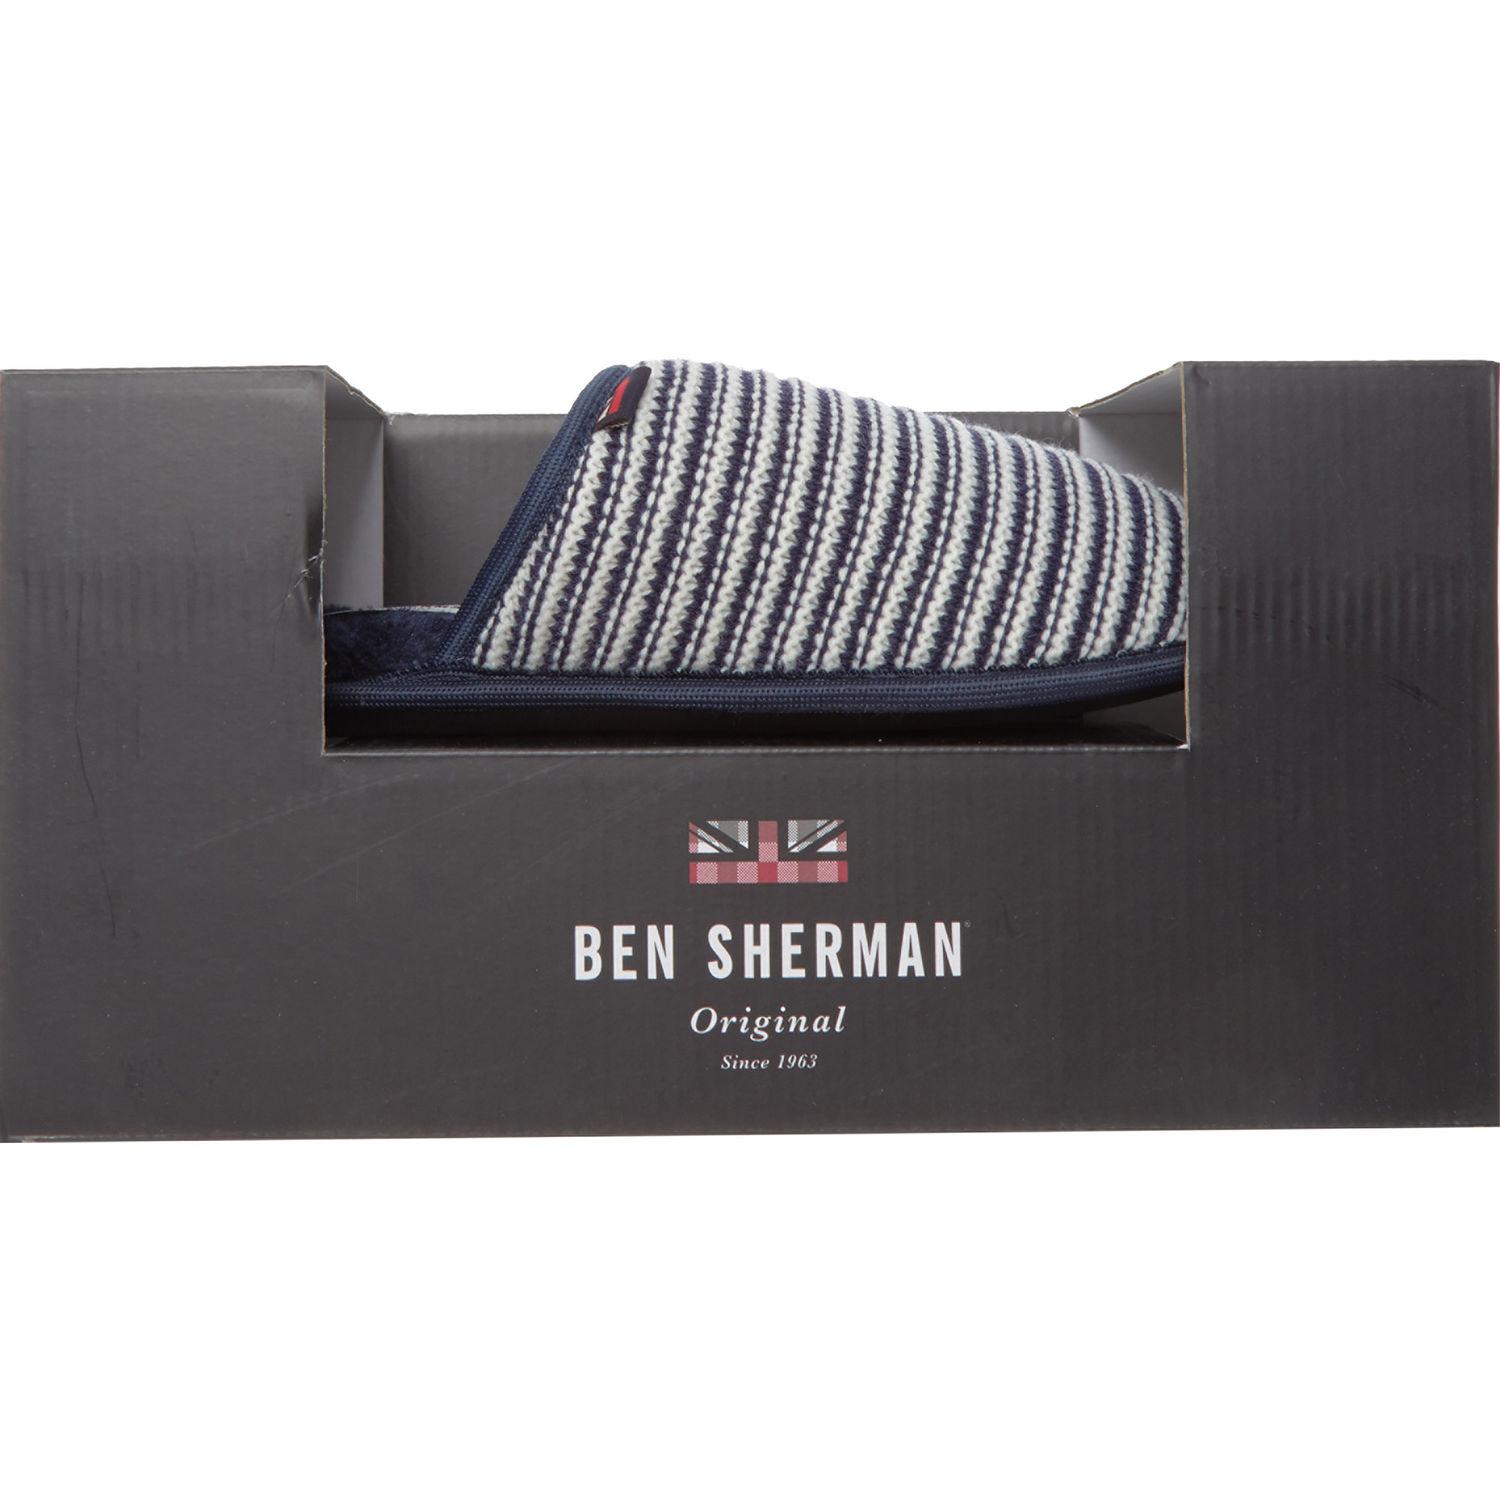 ben sherman slippers tk maxx